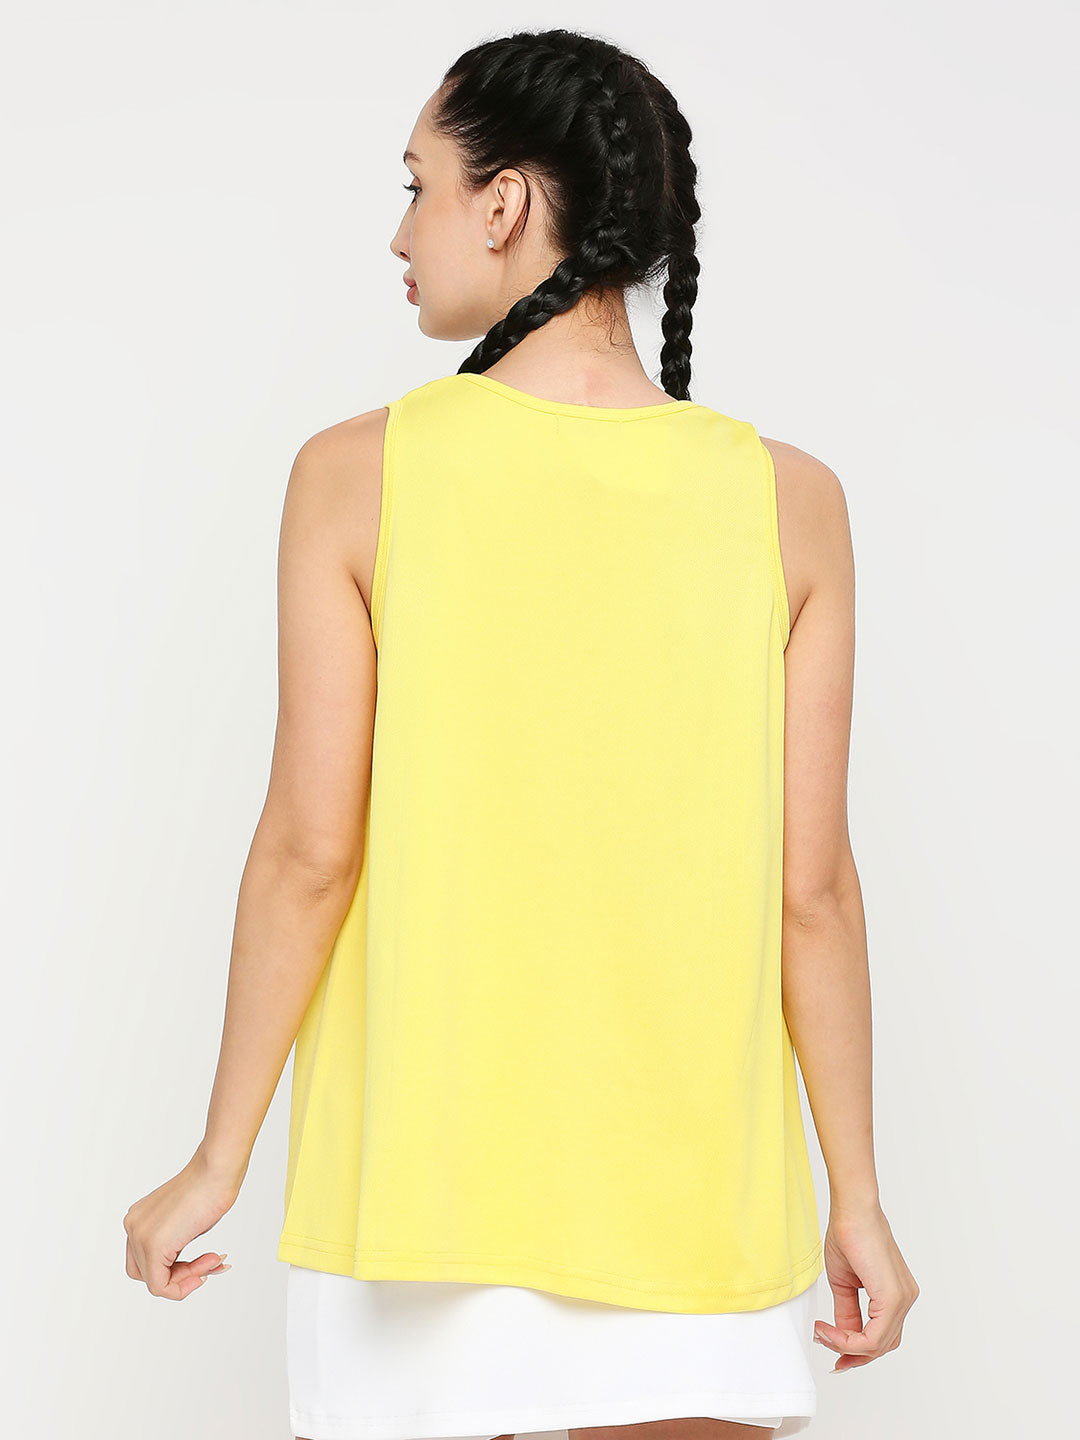 Women's Yellow Flared Tennis Vest - 1